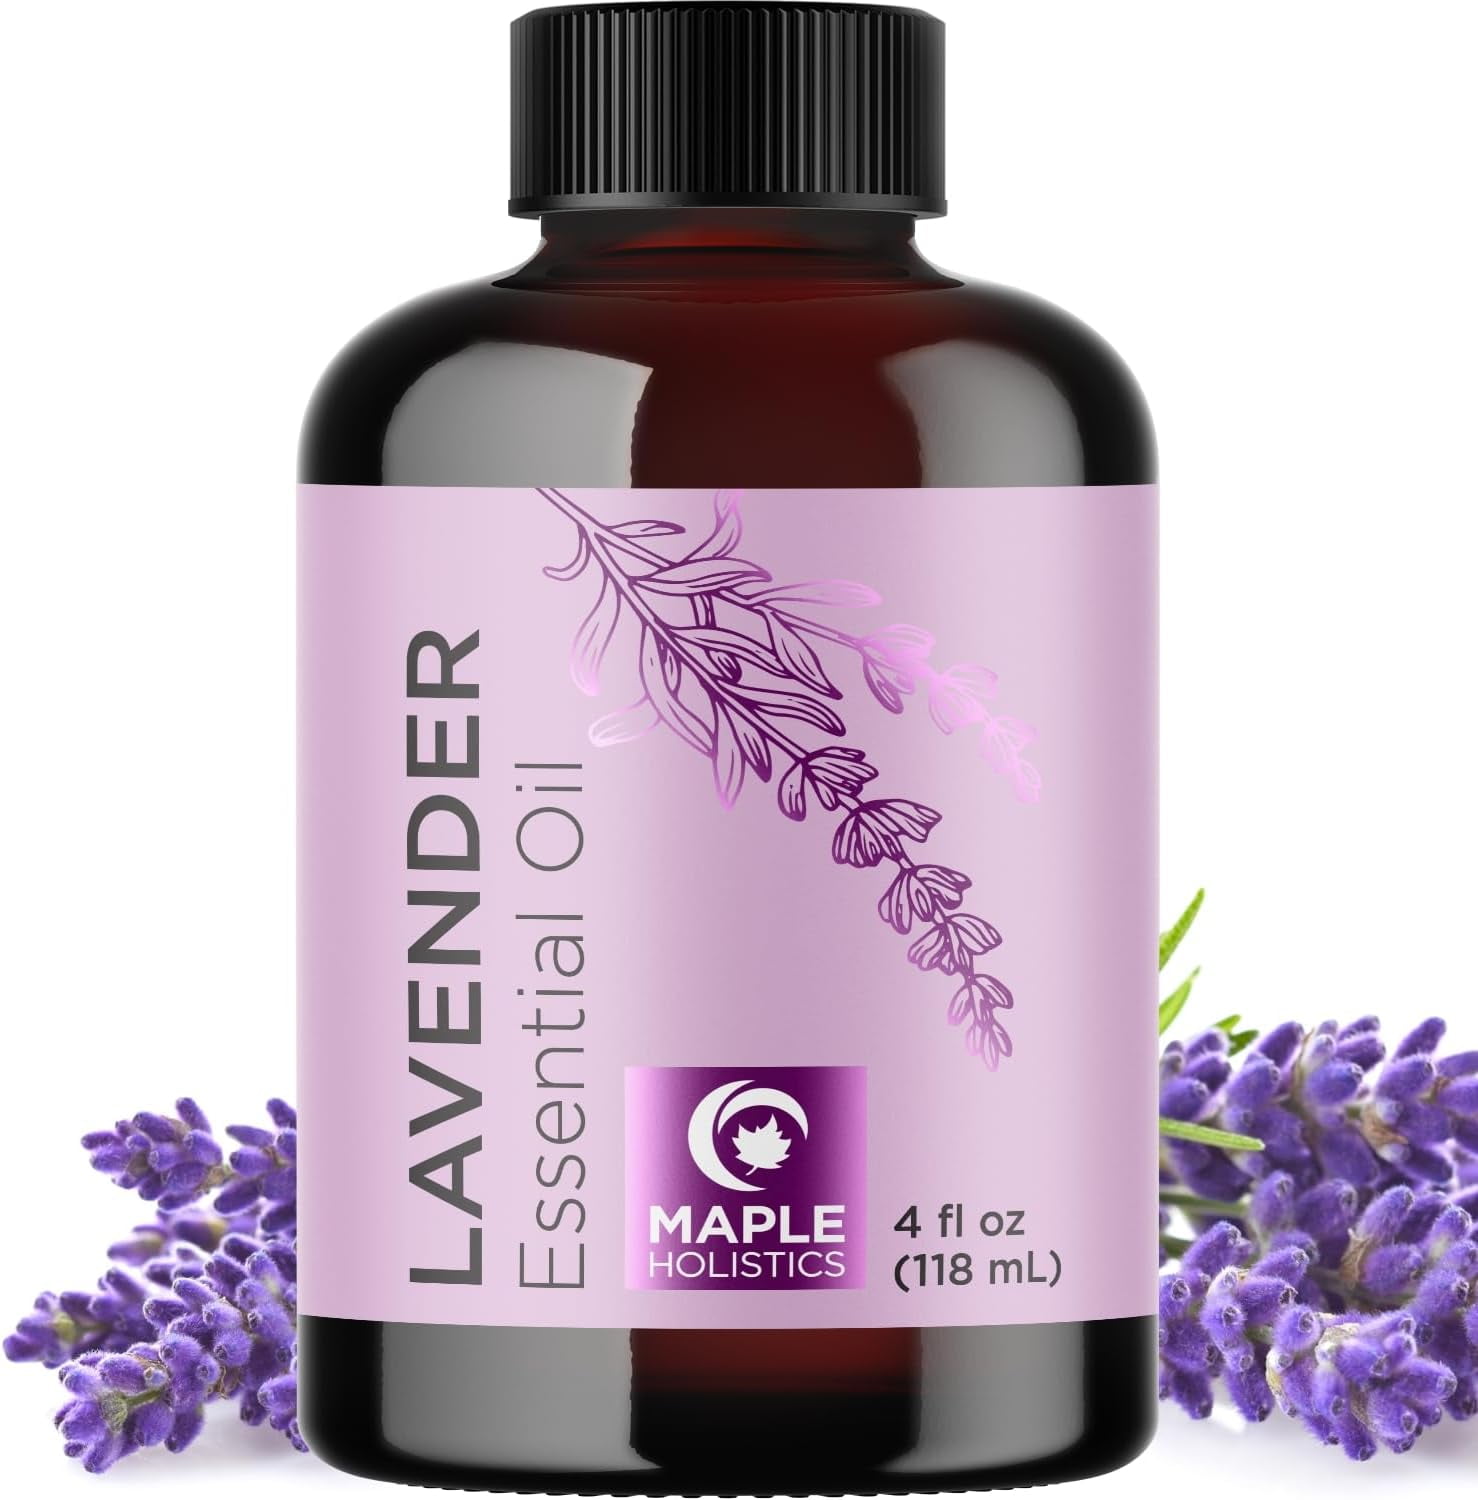 Lavender Essential Oil & Scented Oils